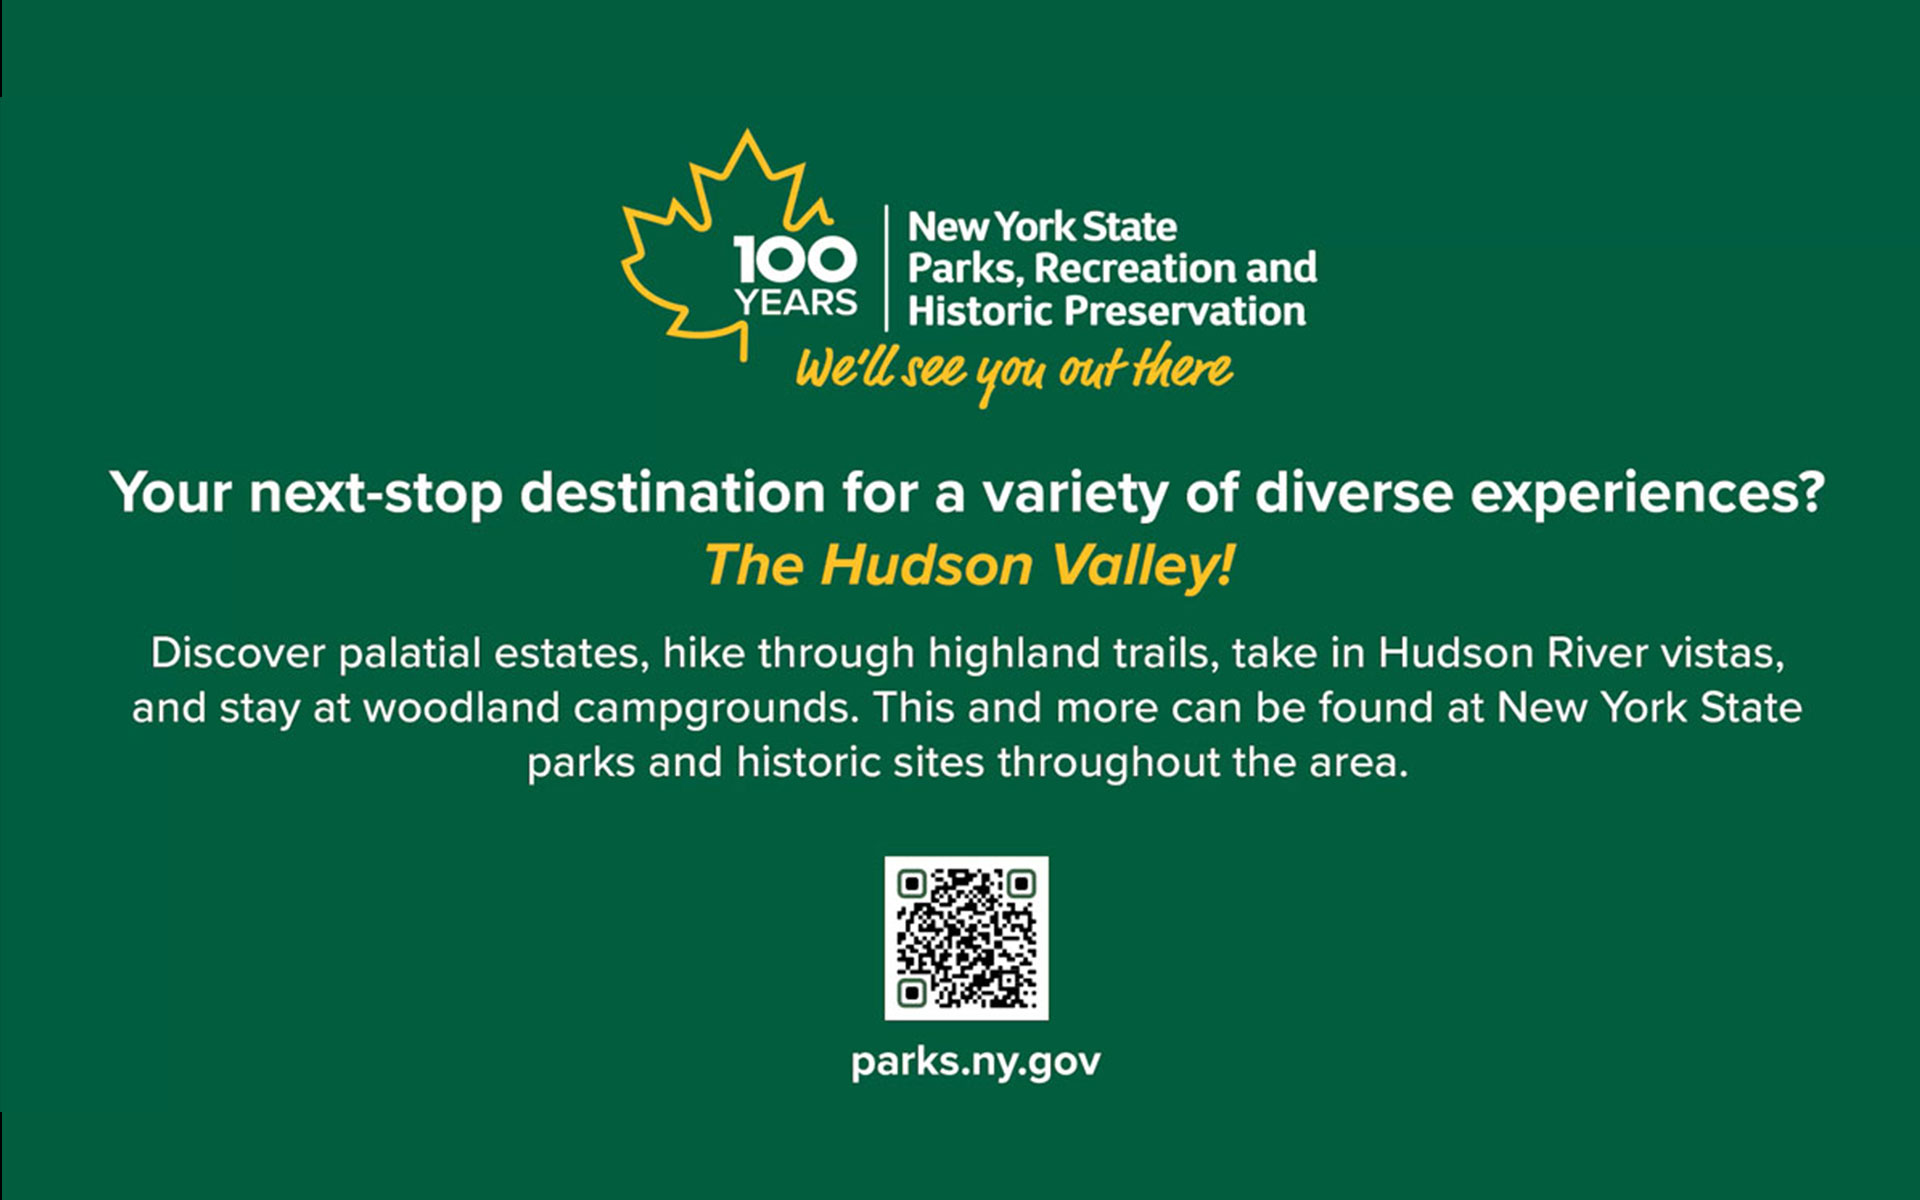 Hudson Valley - New York State Parks